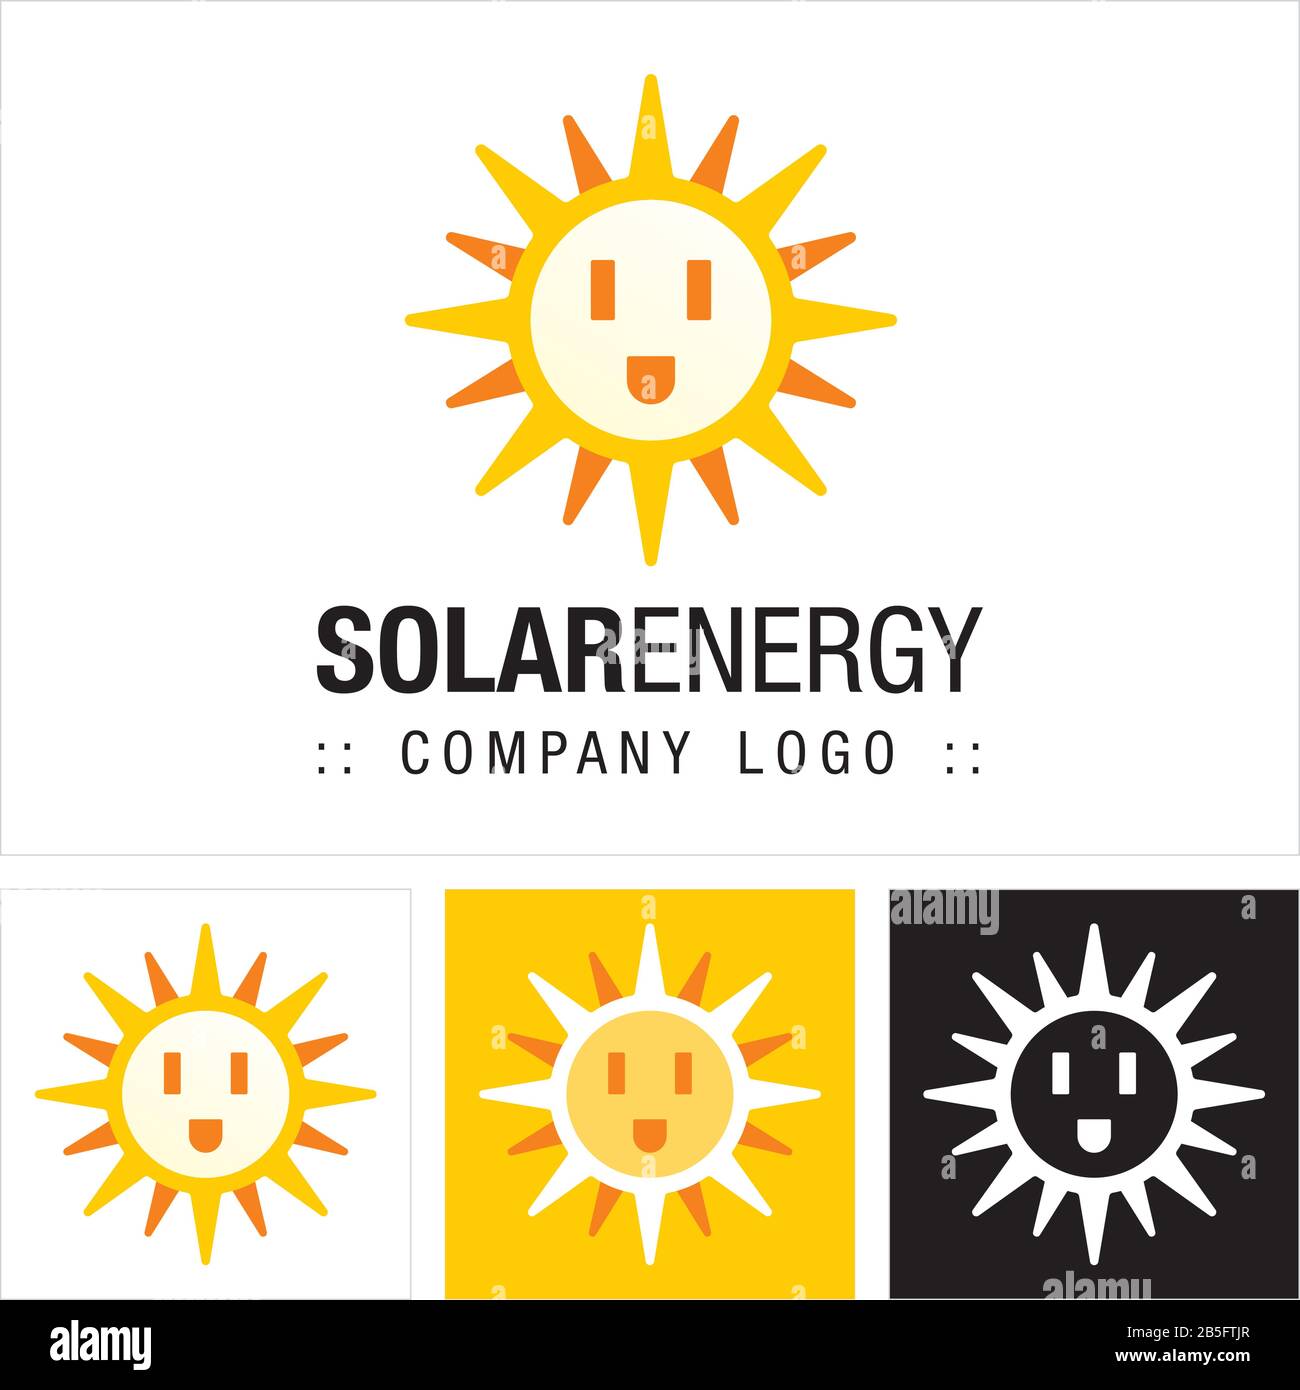 Solar Energy Vector Symbol Company Logo. Cartoon Style Logotype. Sun, Electric Plug and Smile Icon illustration (Emoticon). Elegant Identity Concept Stock Vector